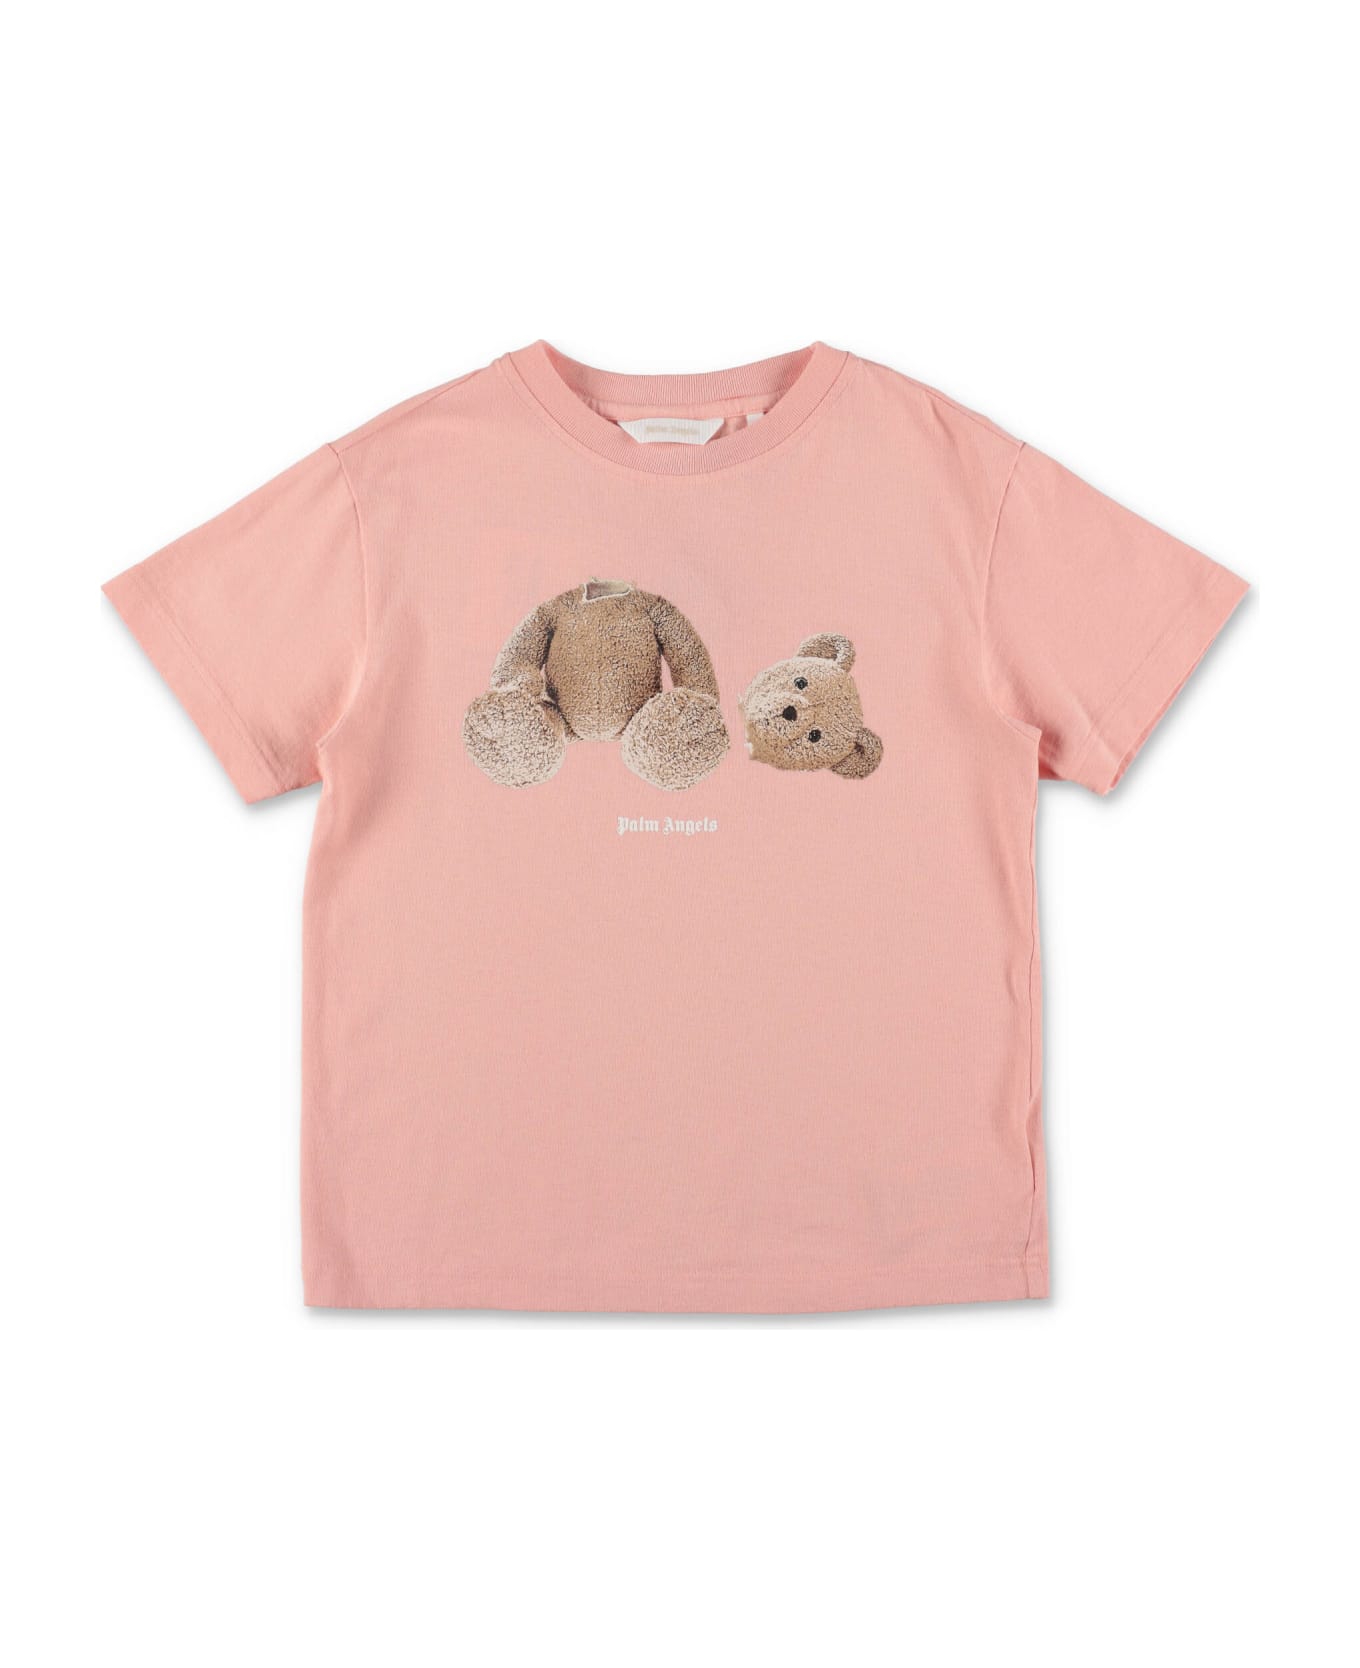 Palm Angels T-shirt Rosa In Jersey Di Cotone Bambina - Rosa